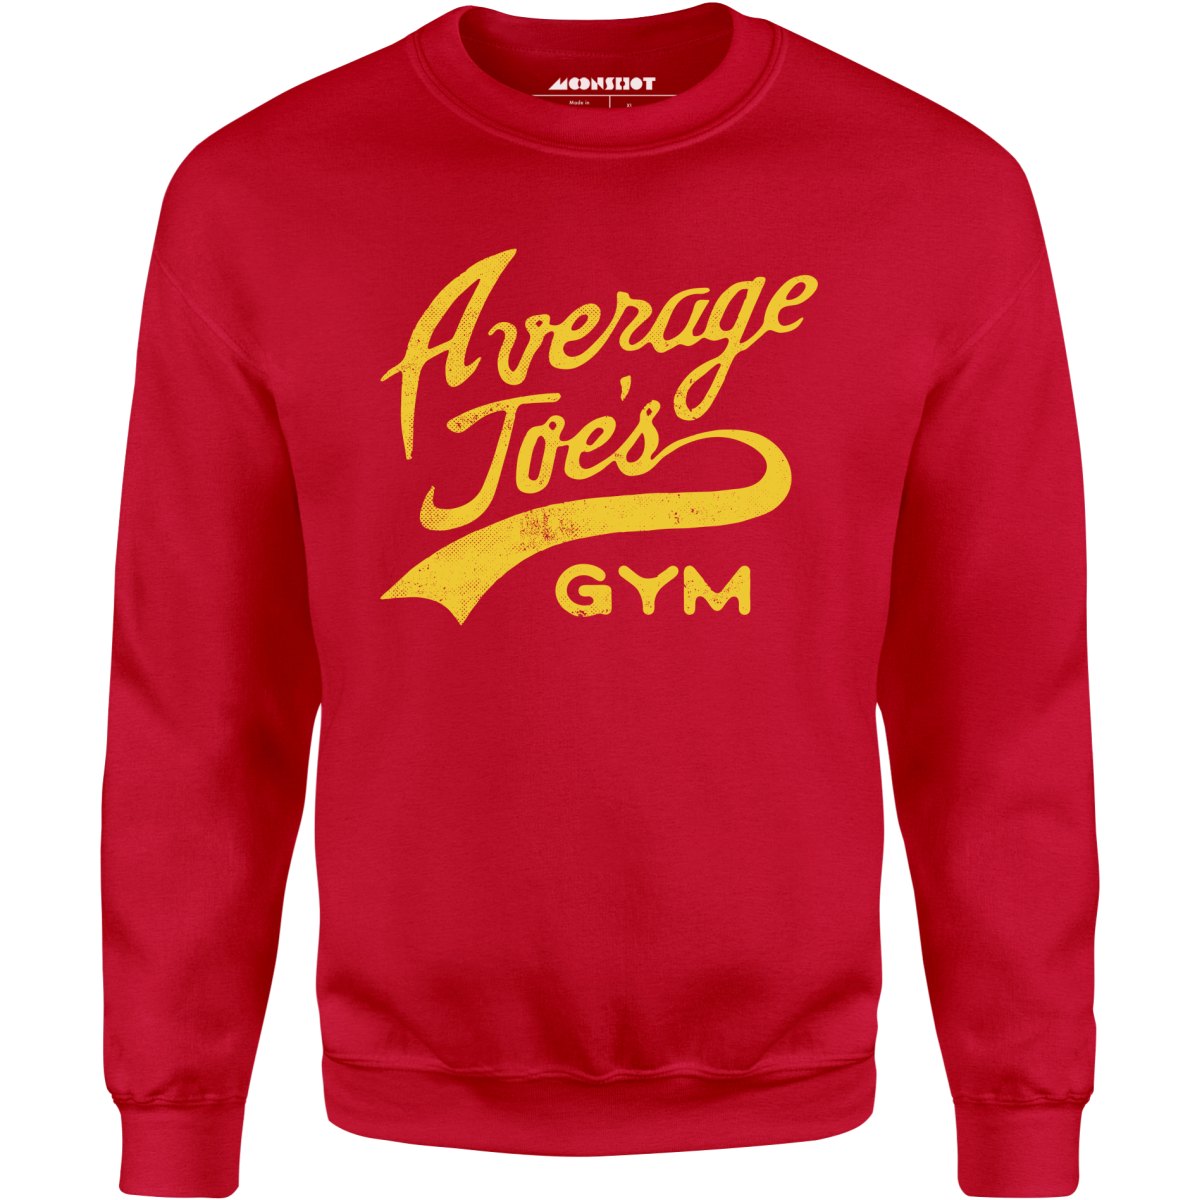 Average Joe's Gym - Unisex Sweatshirt